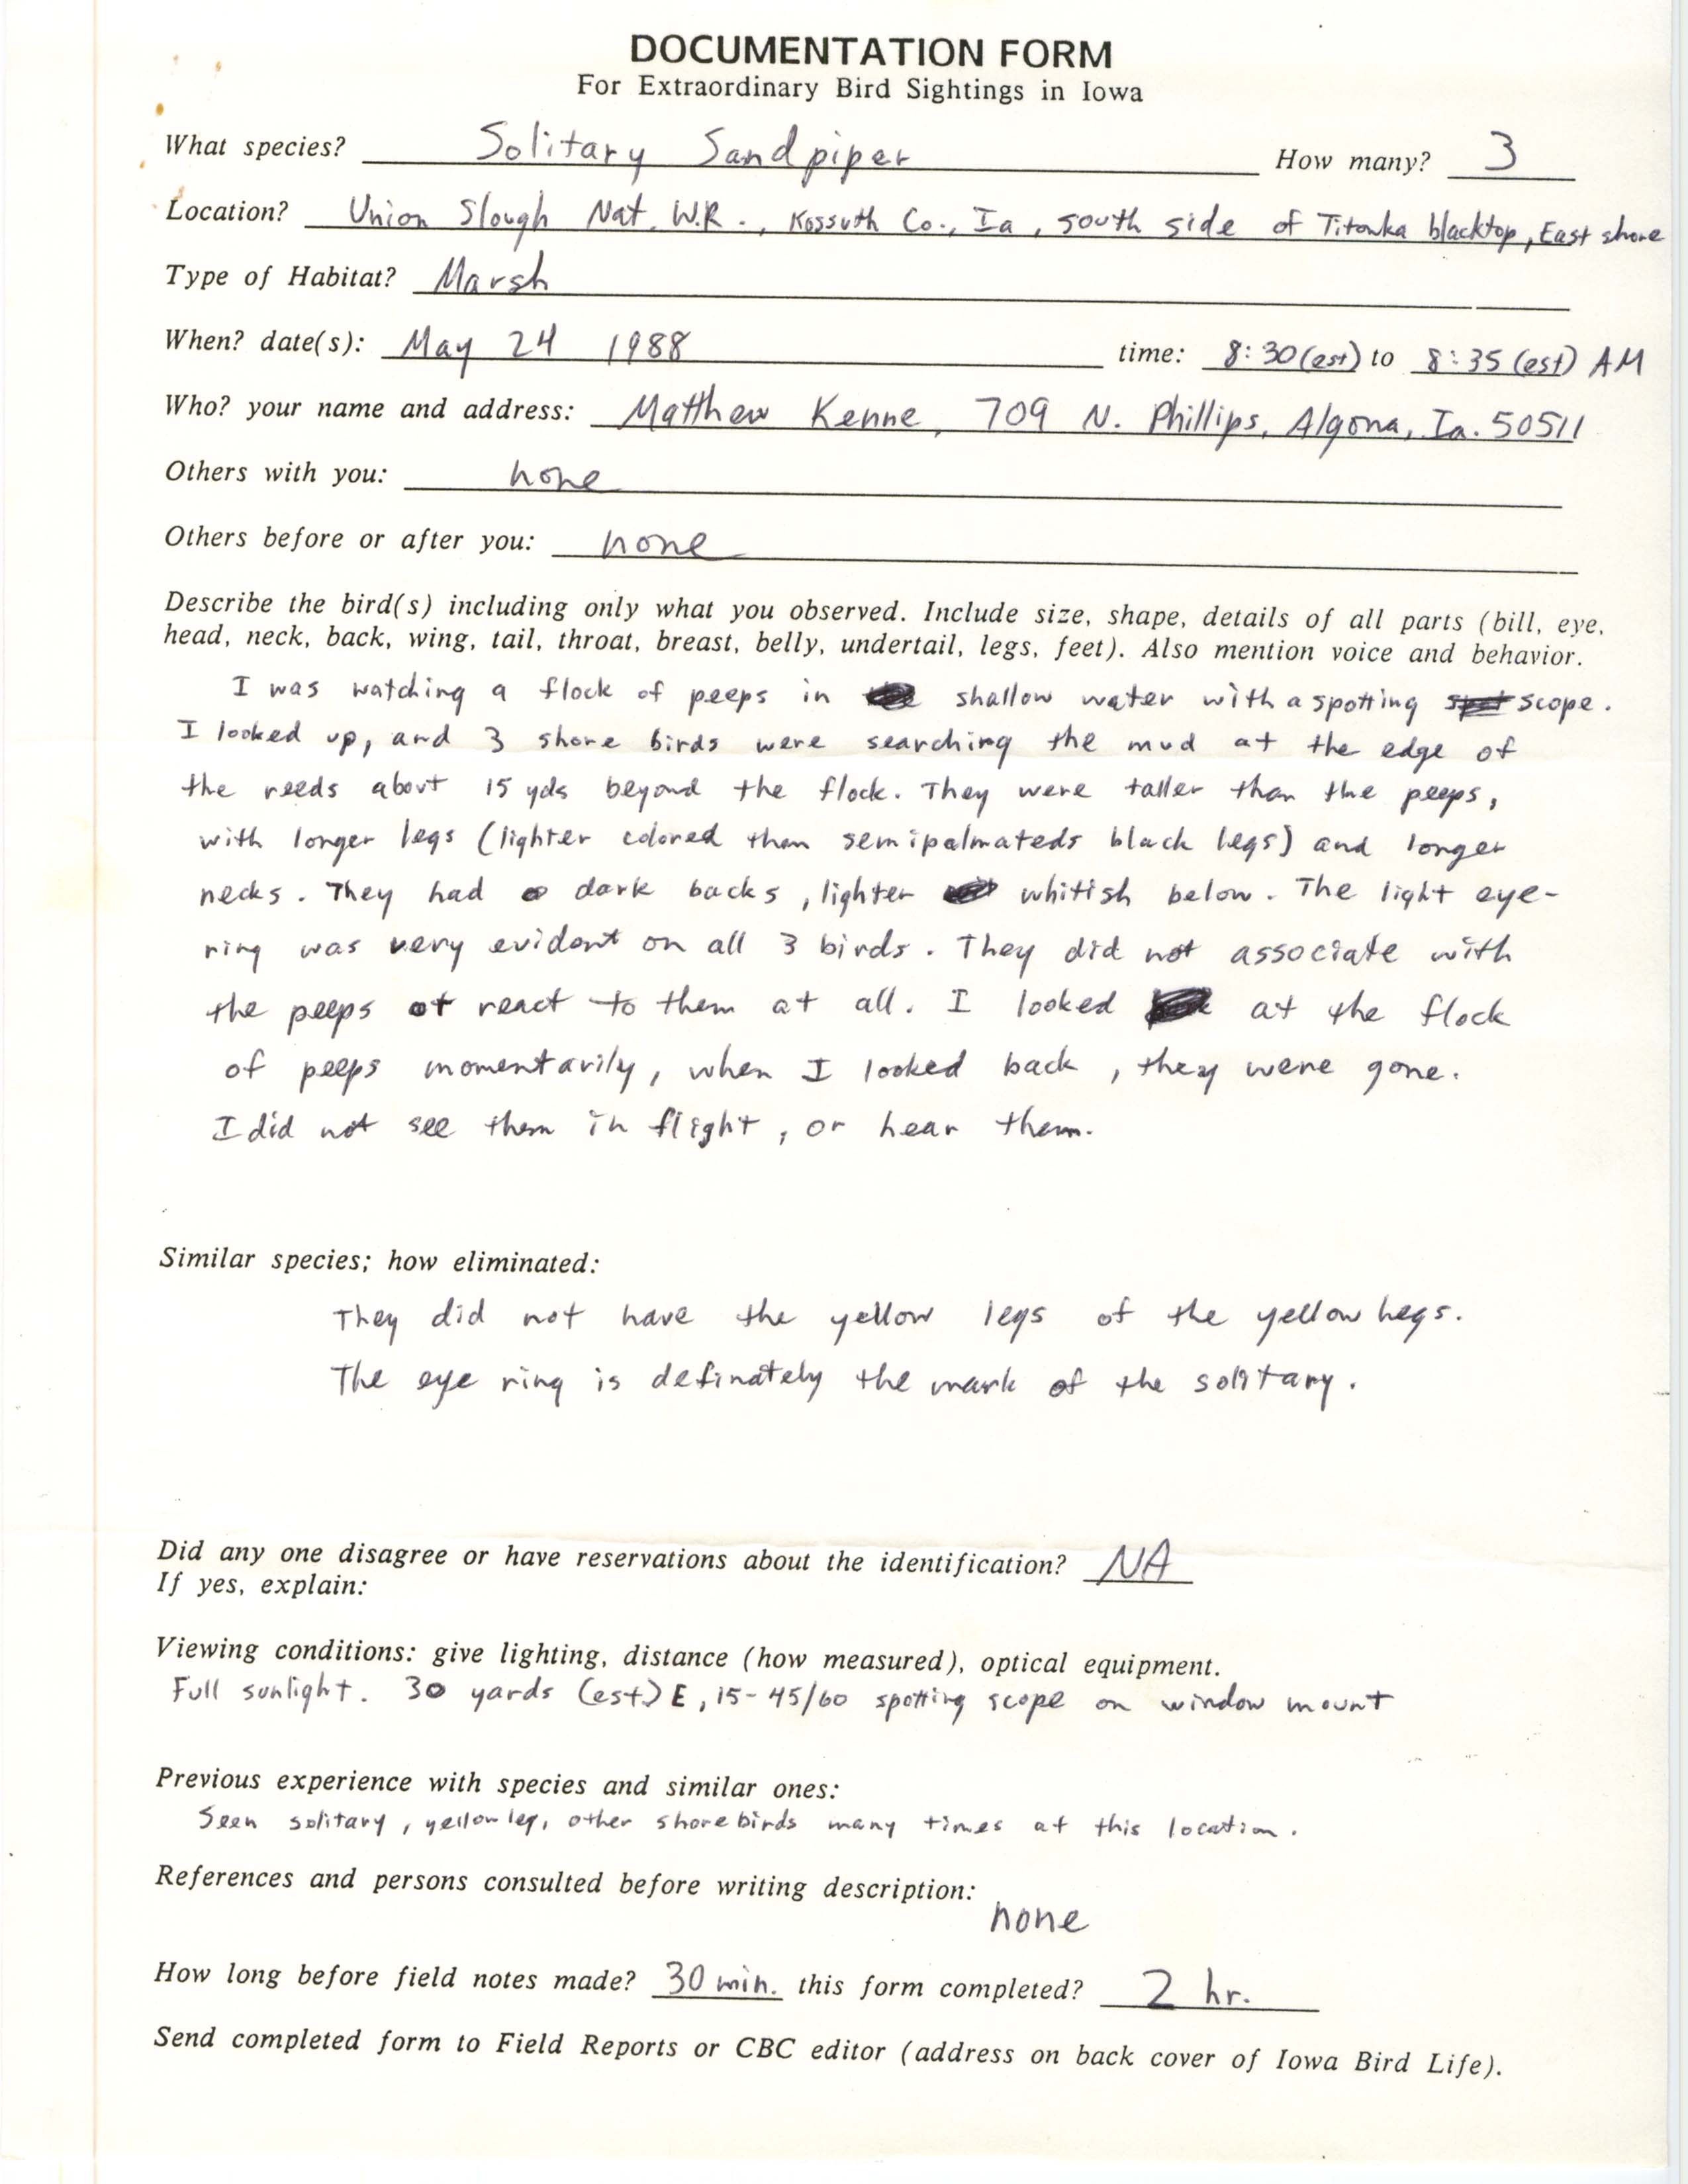 Rare bird documentation form for Solitary Sandpiper at Union Slough National Wildlife Refuge, 1988